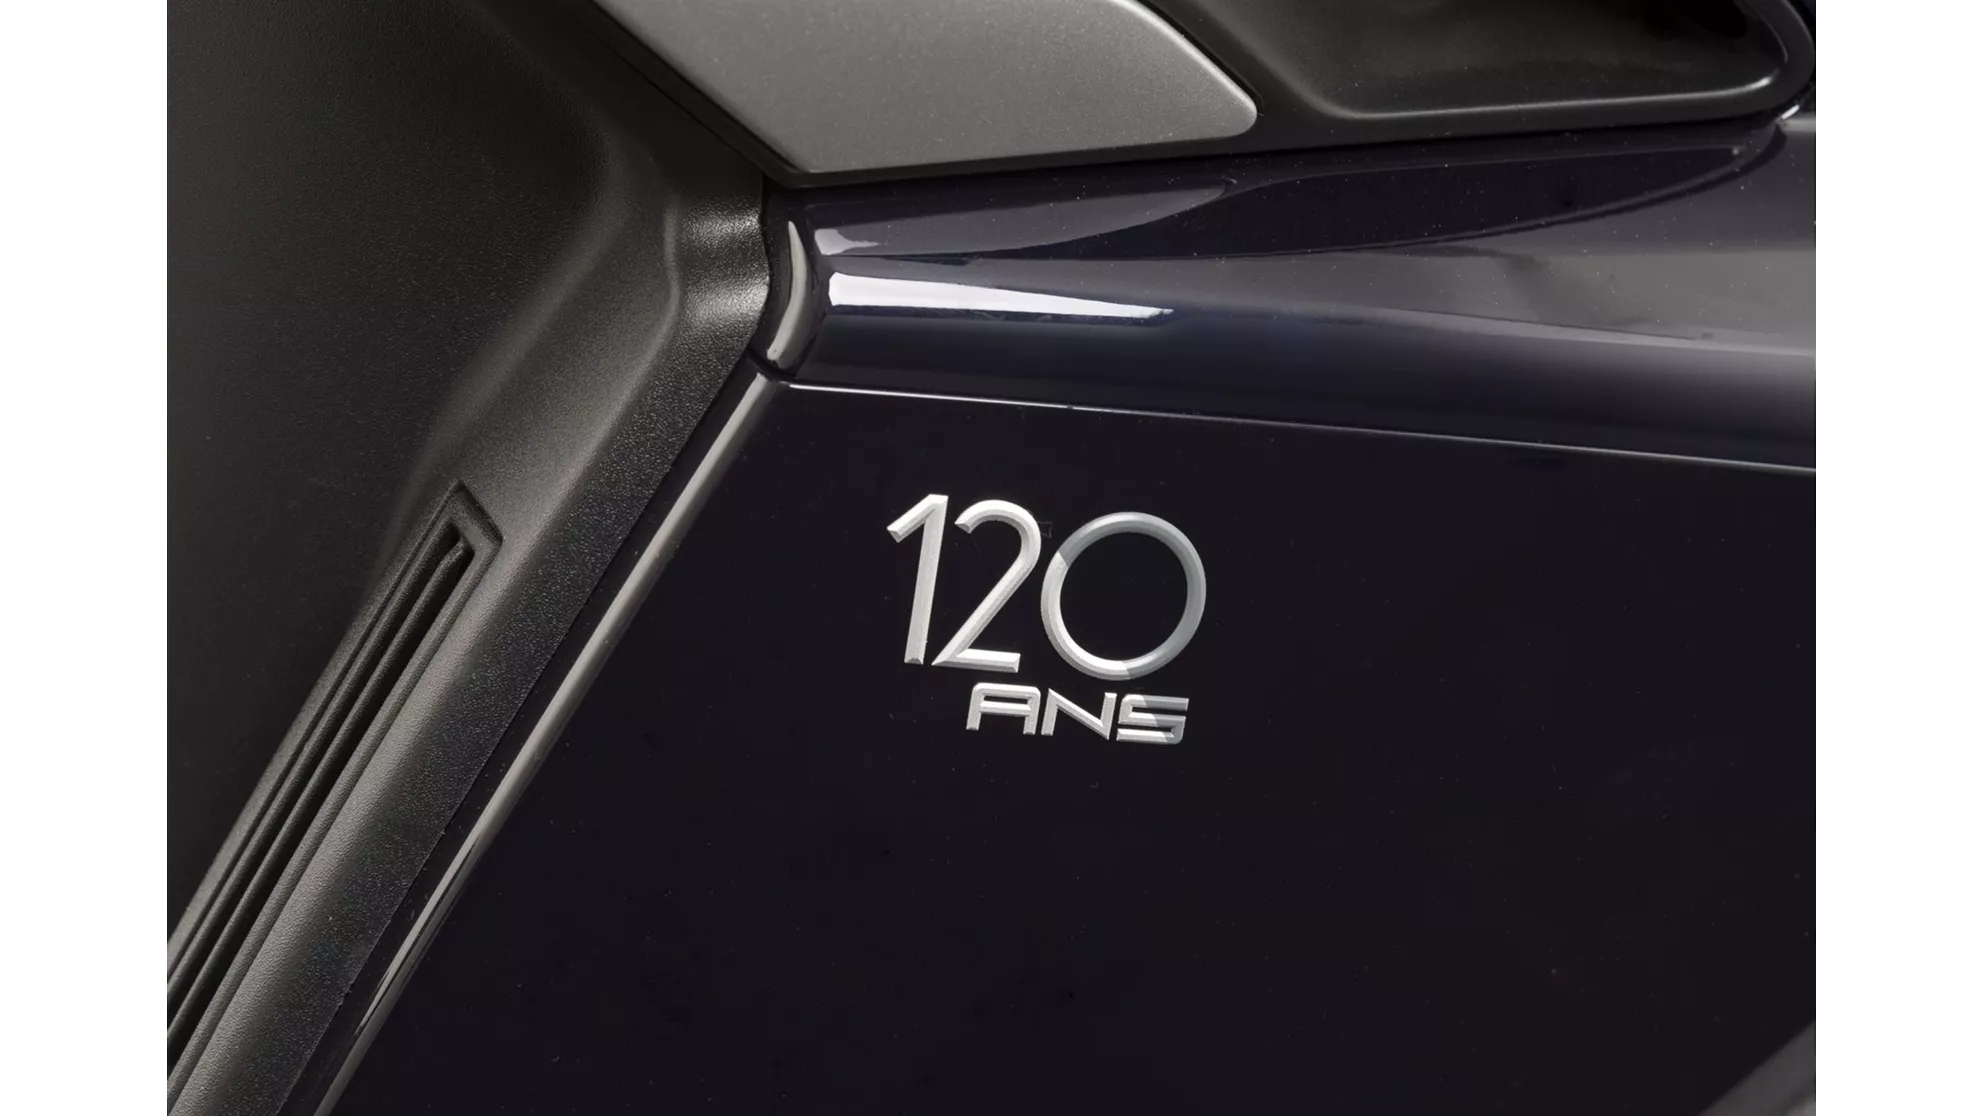 Peugeot Metropolis 120 ans - Image 1